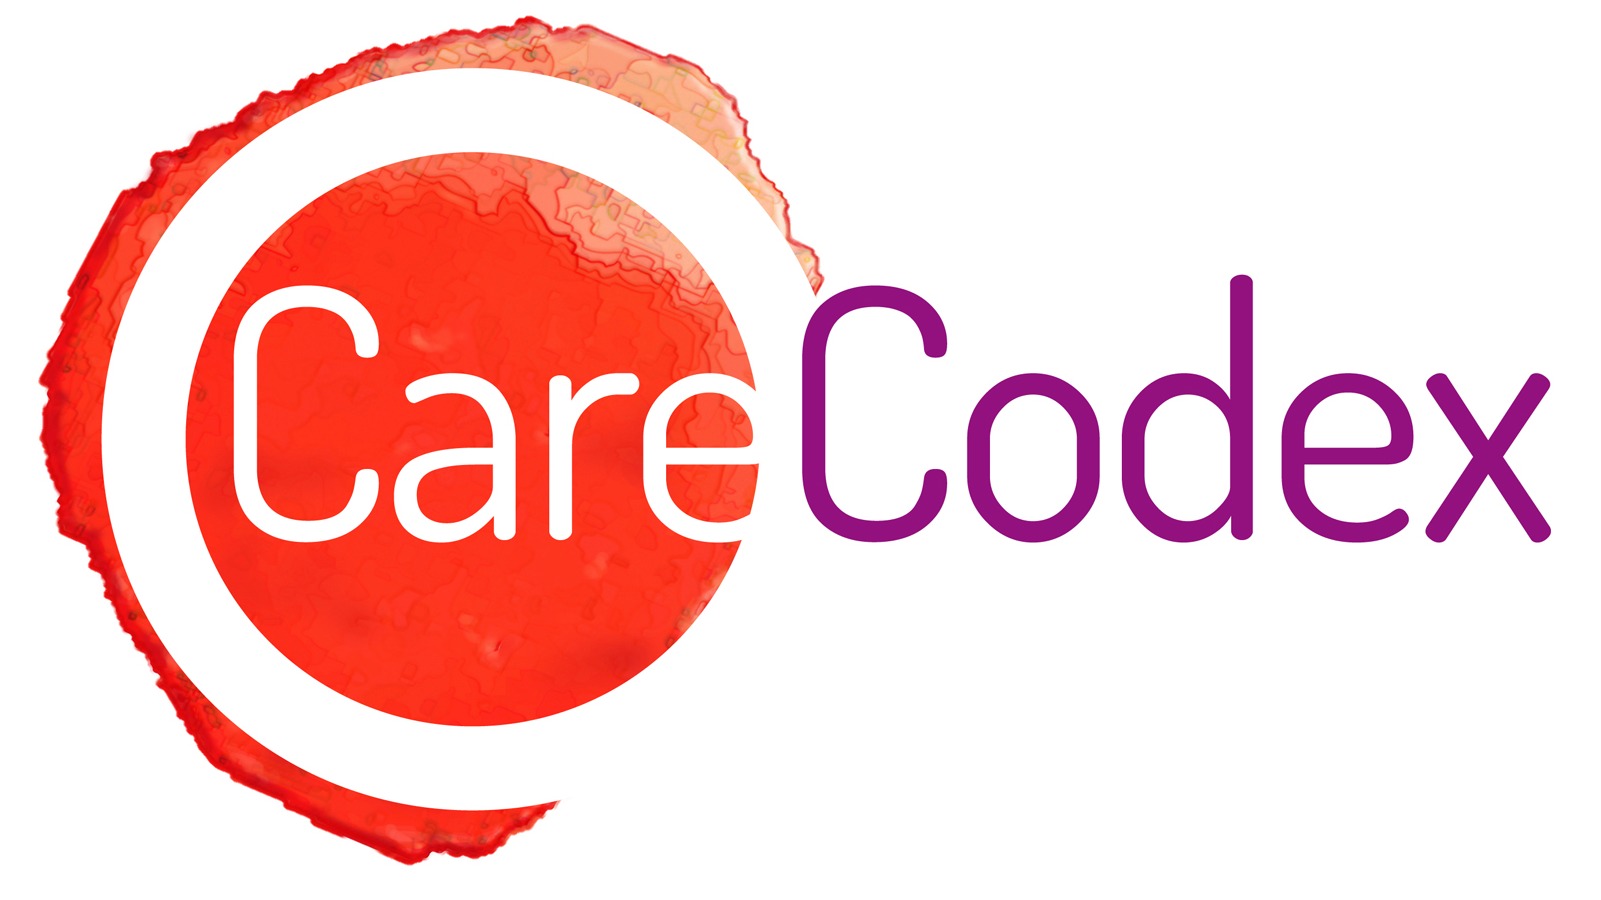 Stichting CareCodex